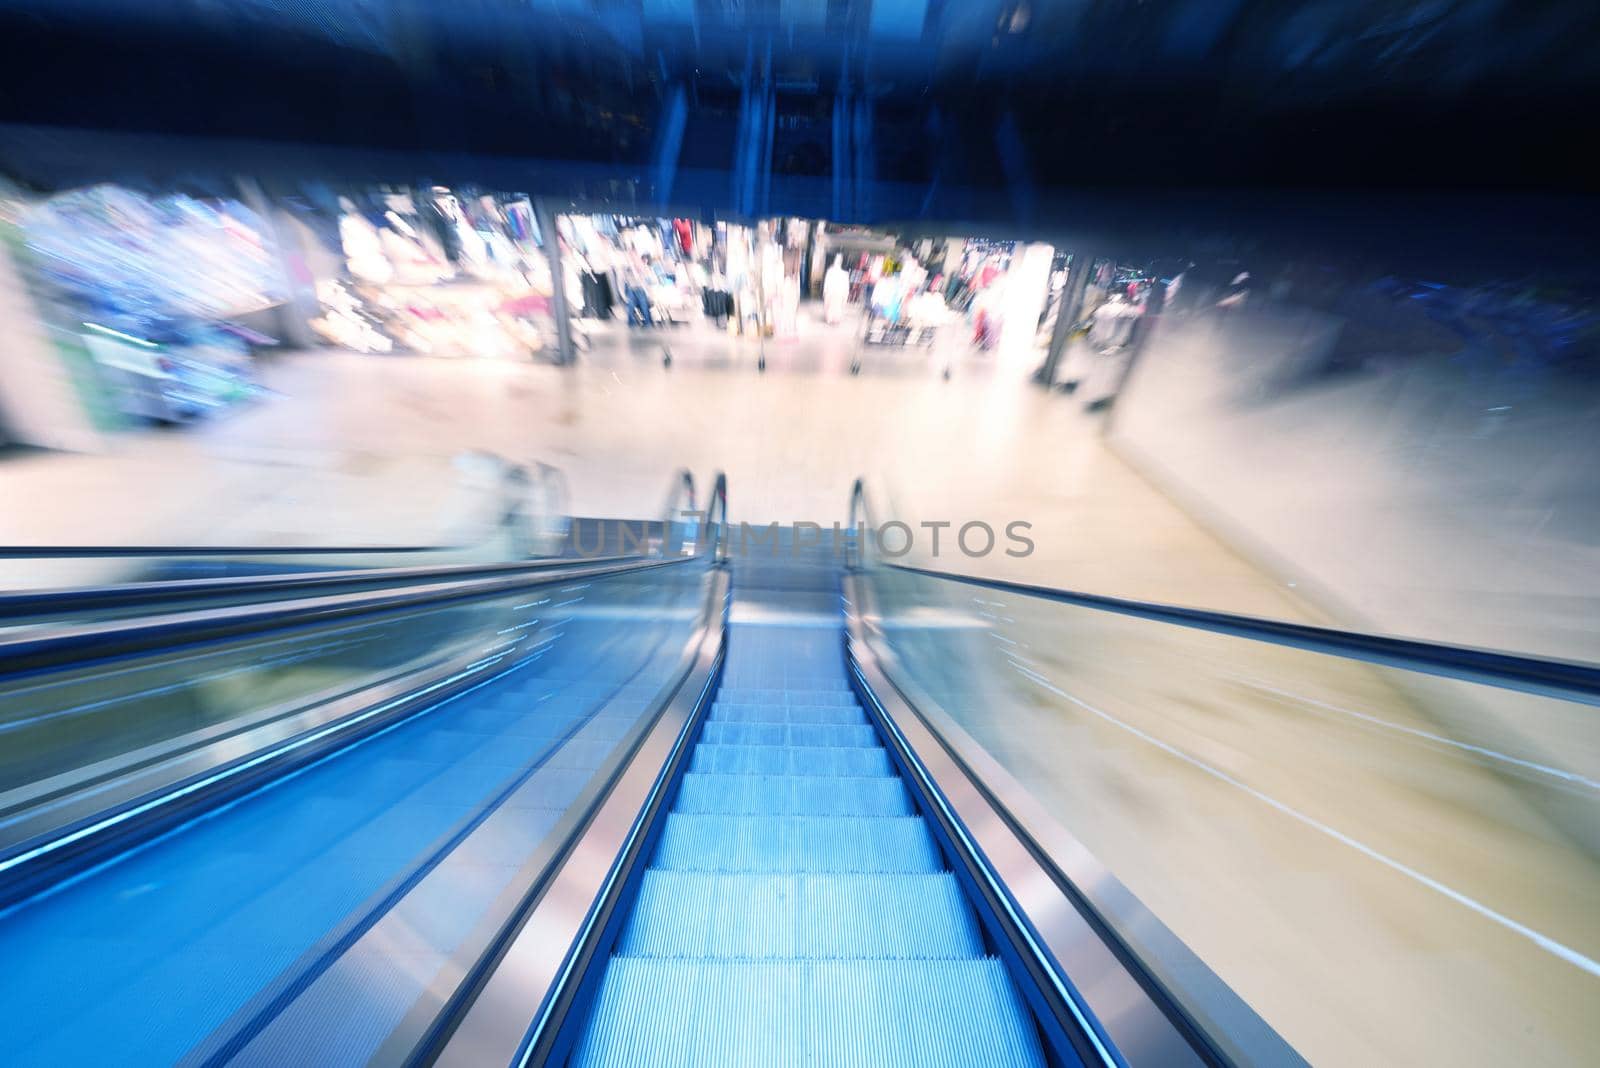 Shopping mall  escalators by dotshock